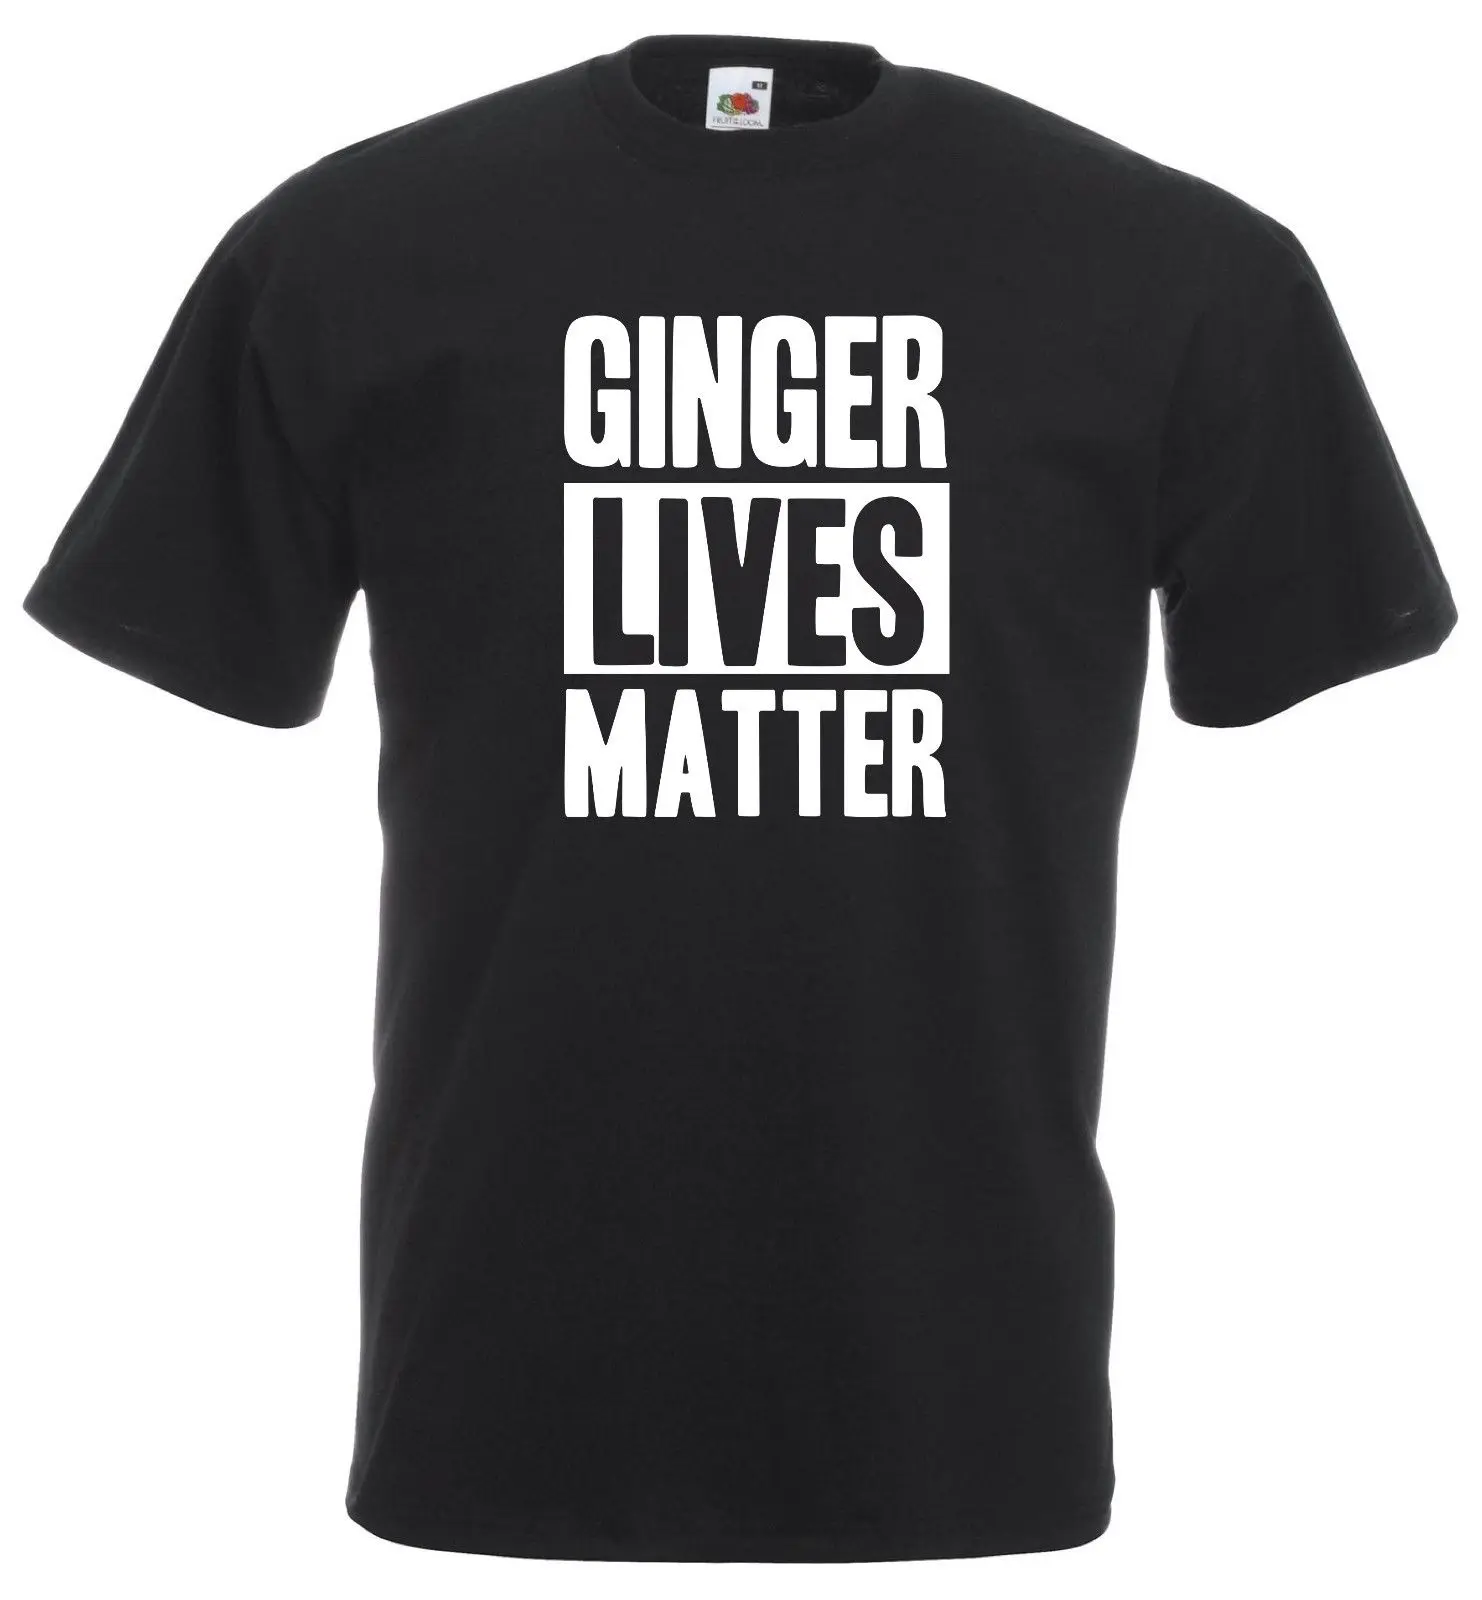 

GINGER LIVES MATTER T-SHIRT - FUNNY JOKE ORANGE BLACK REDHEAD MENS LADIES New T Shirts Funny Tops Tee New